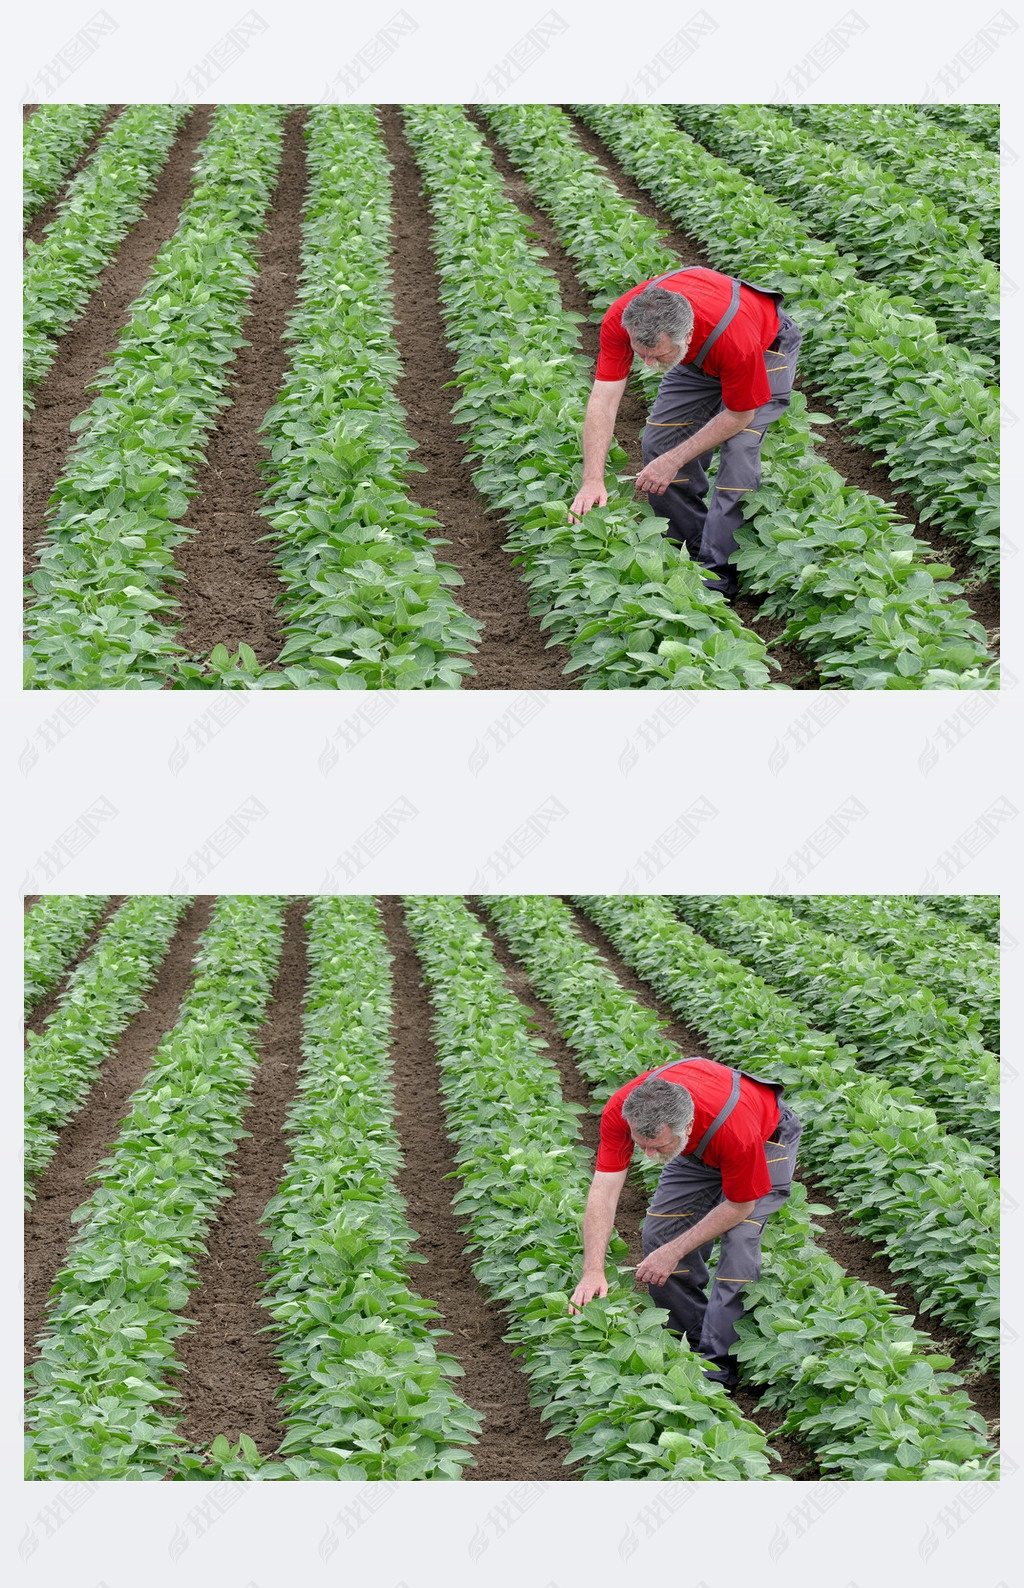 Farmer or agronomist in soy bean field examine plant